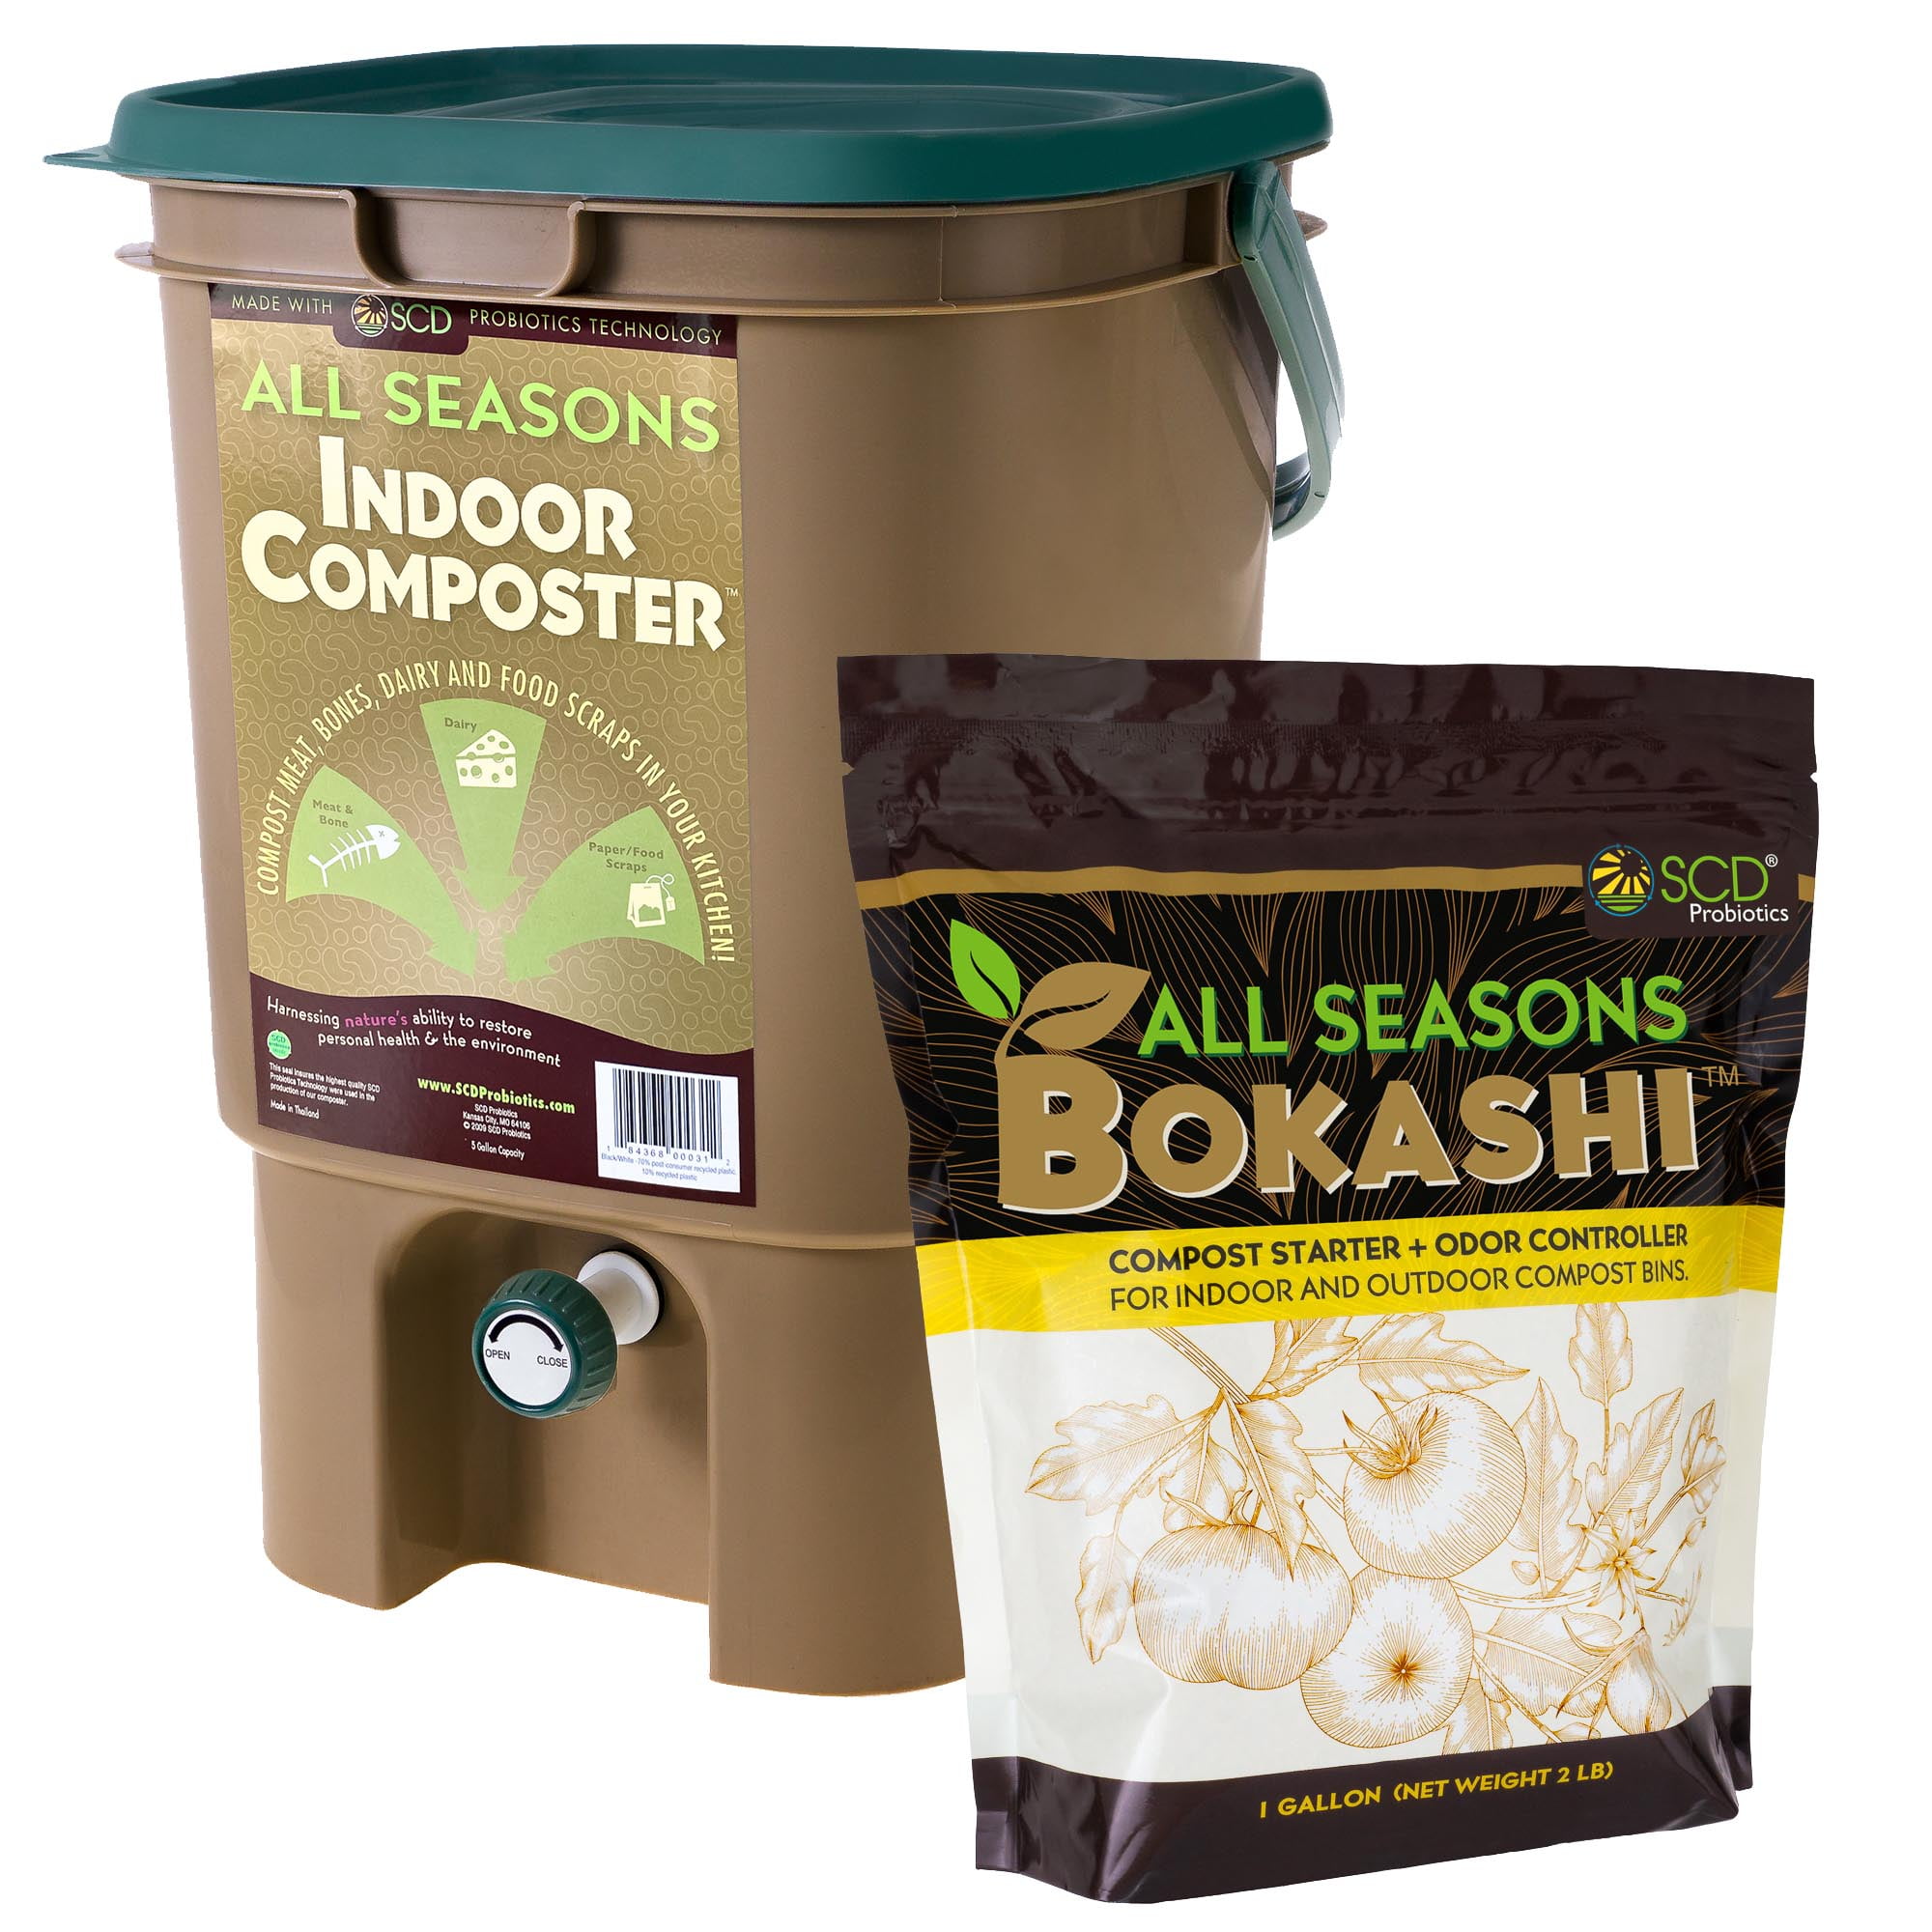 Cooler Kitchen 3 Liter Compost Bin with EZ-No Lock Lid, Plastic Liner & Charcoal Filters-Sturdy Construction & Odor-Free Seal w/Dishwasher Safe Bucket